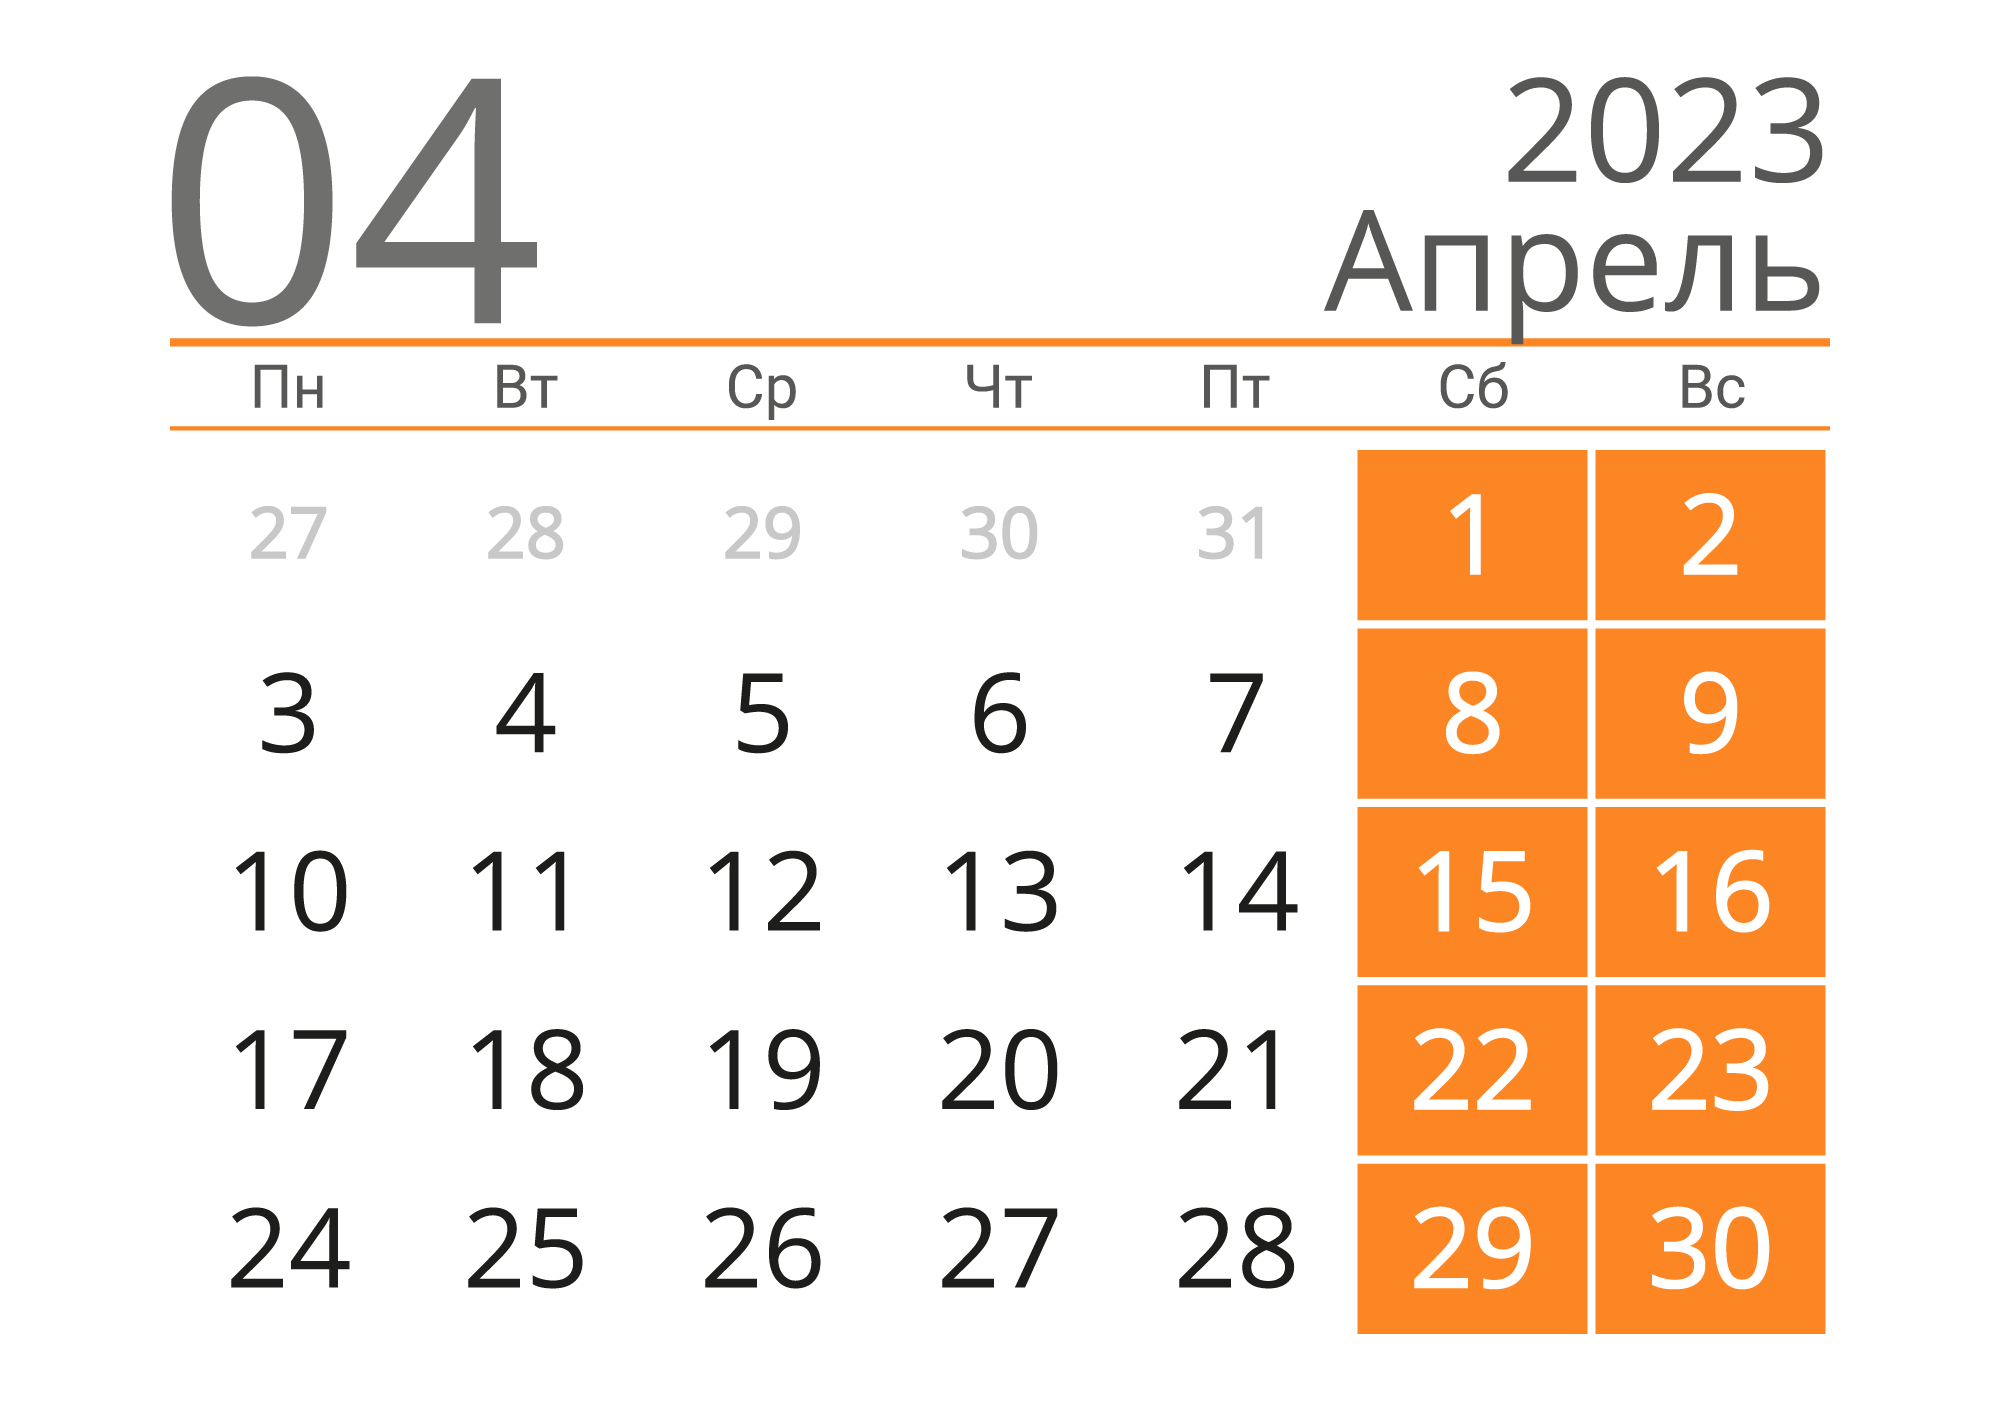 14 апреля 2023 какой. Июль 2022. Октябрь 2022. Календарь октябрь 2022. Календарь на июль 2022 года.